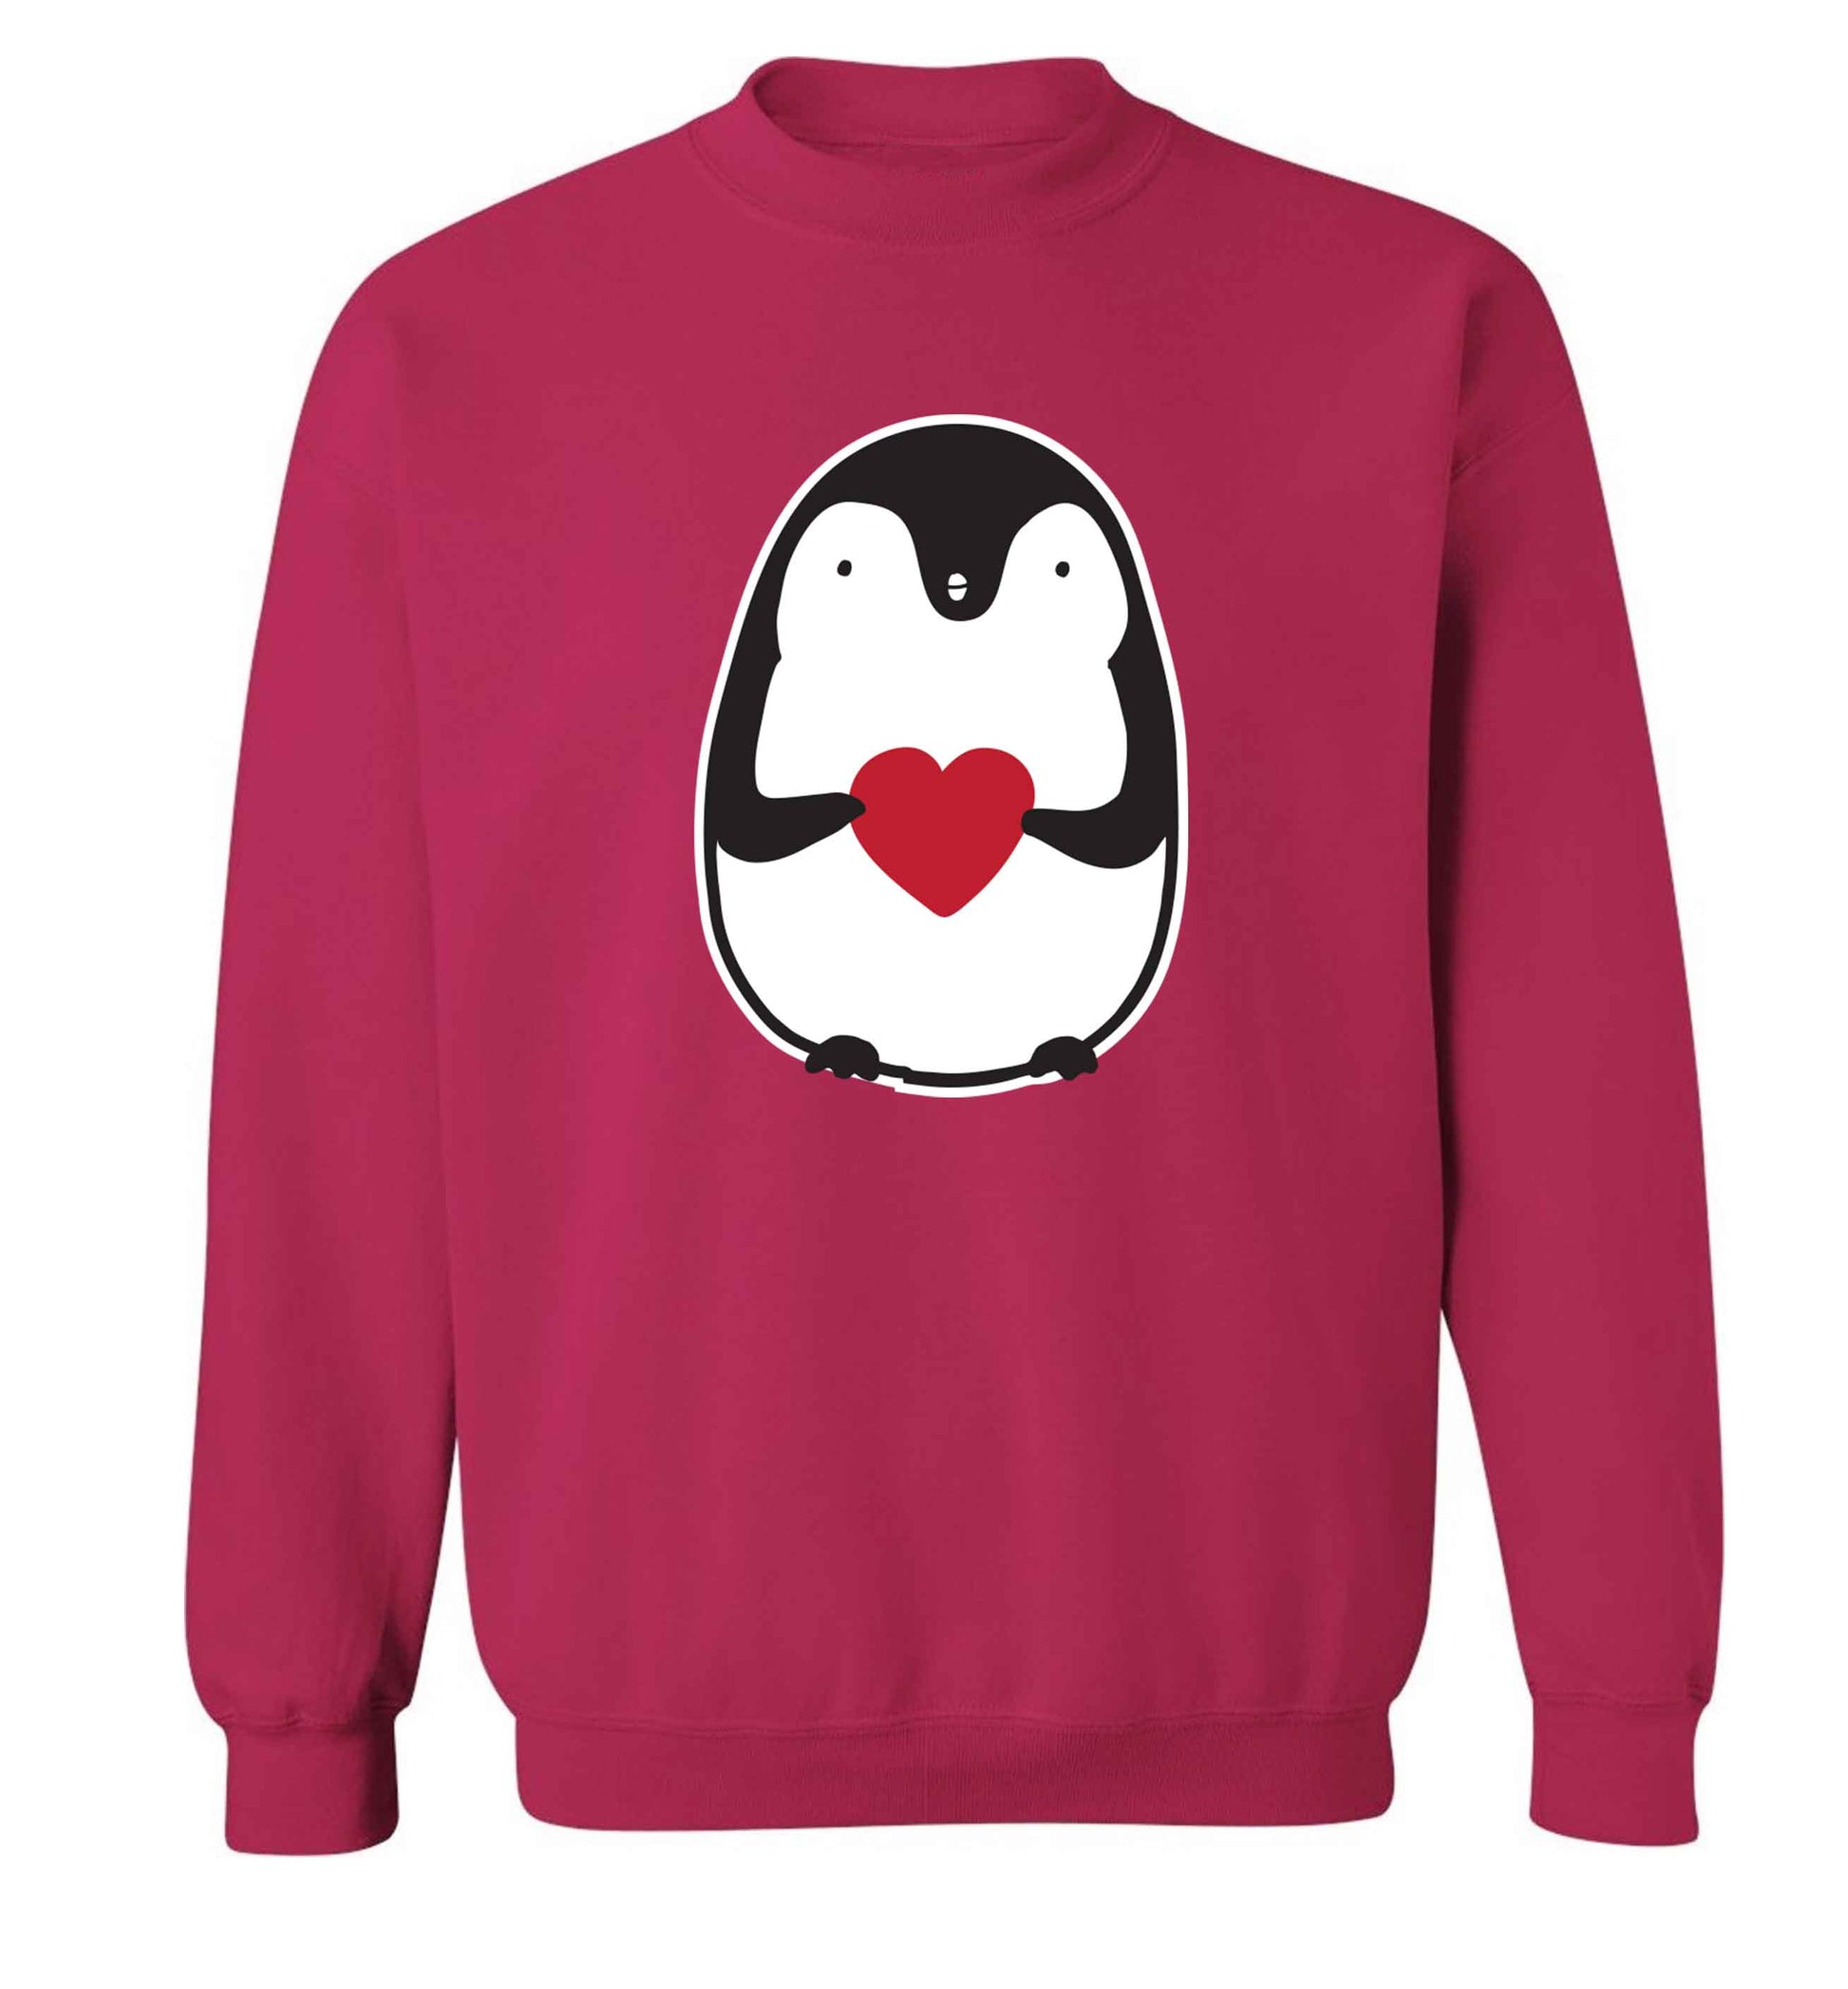 Cute penguin heart adult's unisex pink sweater 2XL